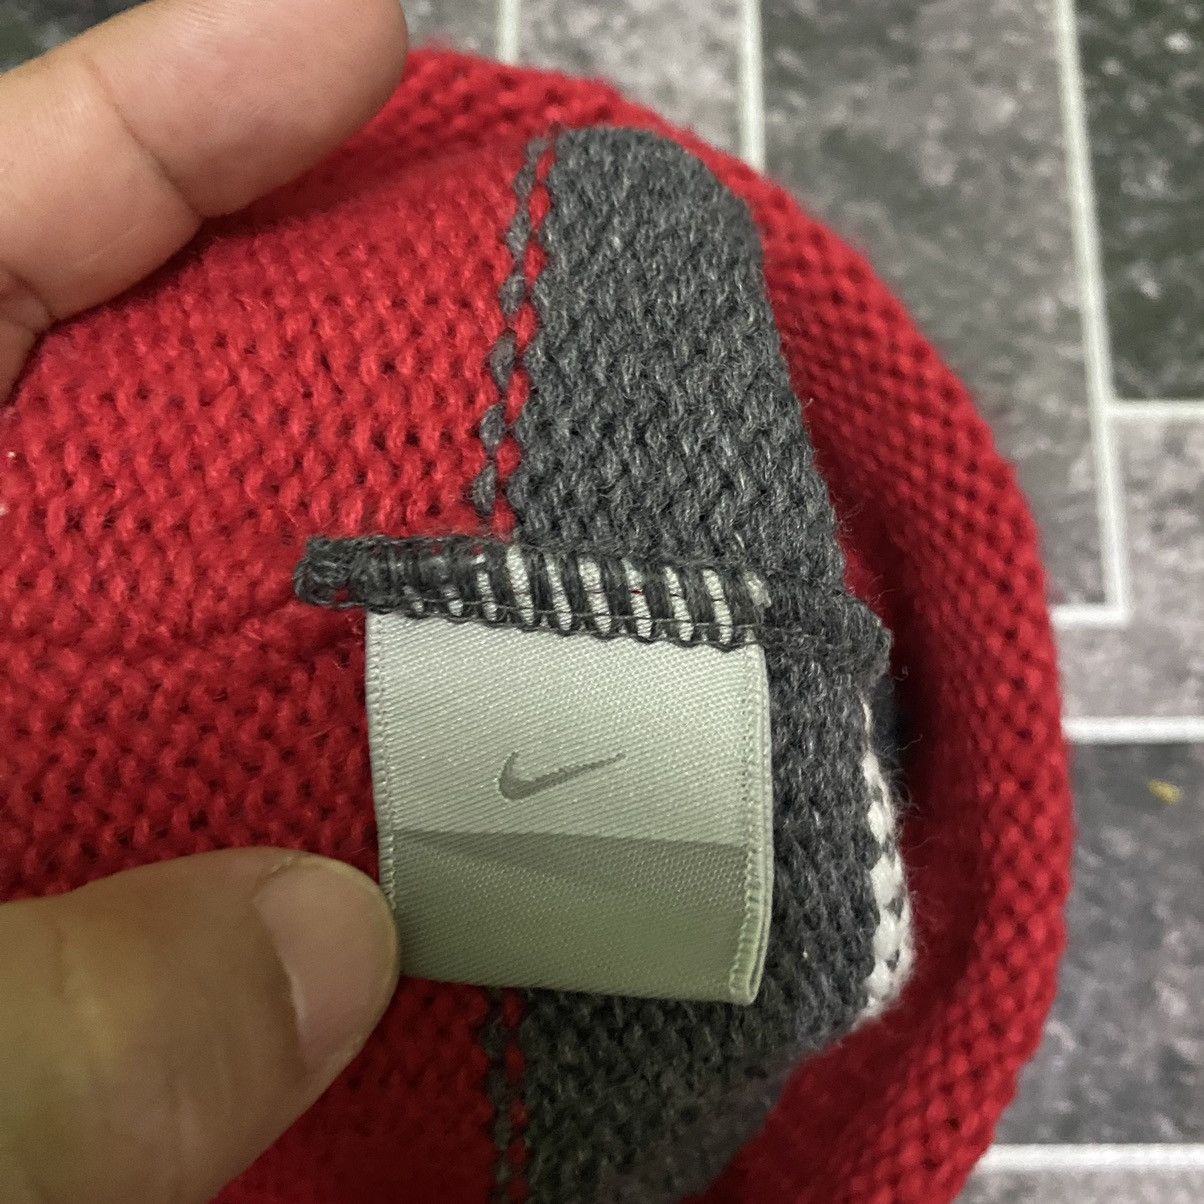 Vintage Nike Beanie Hat Red/white/grey Colour - 7